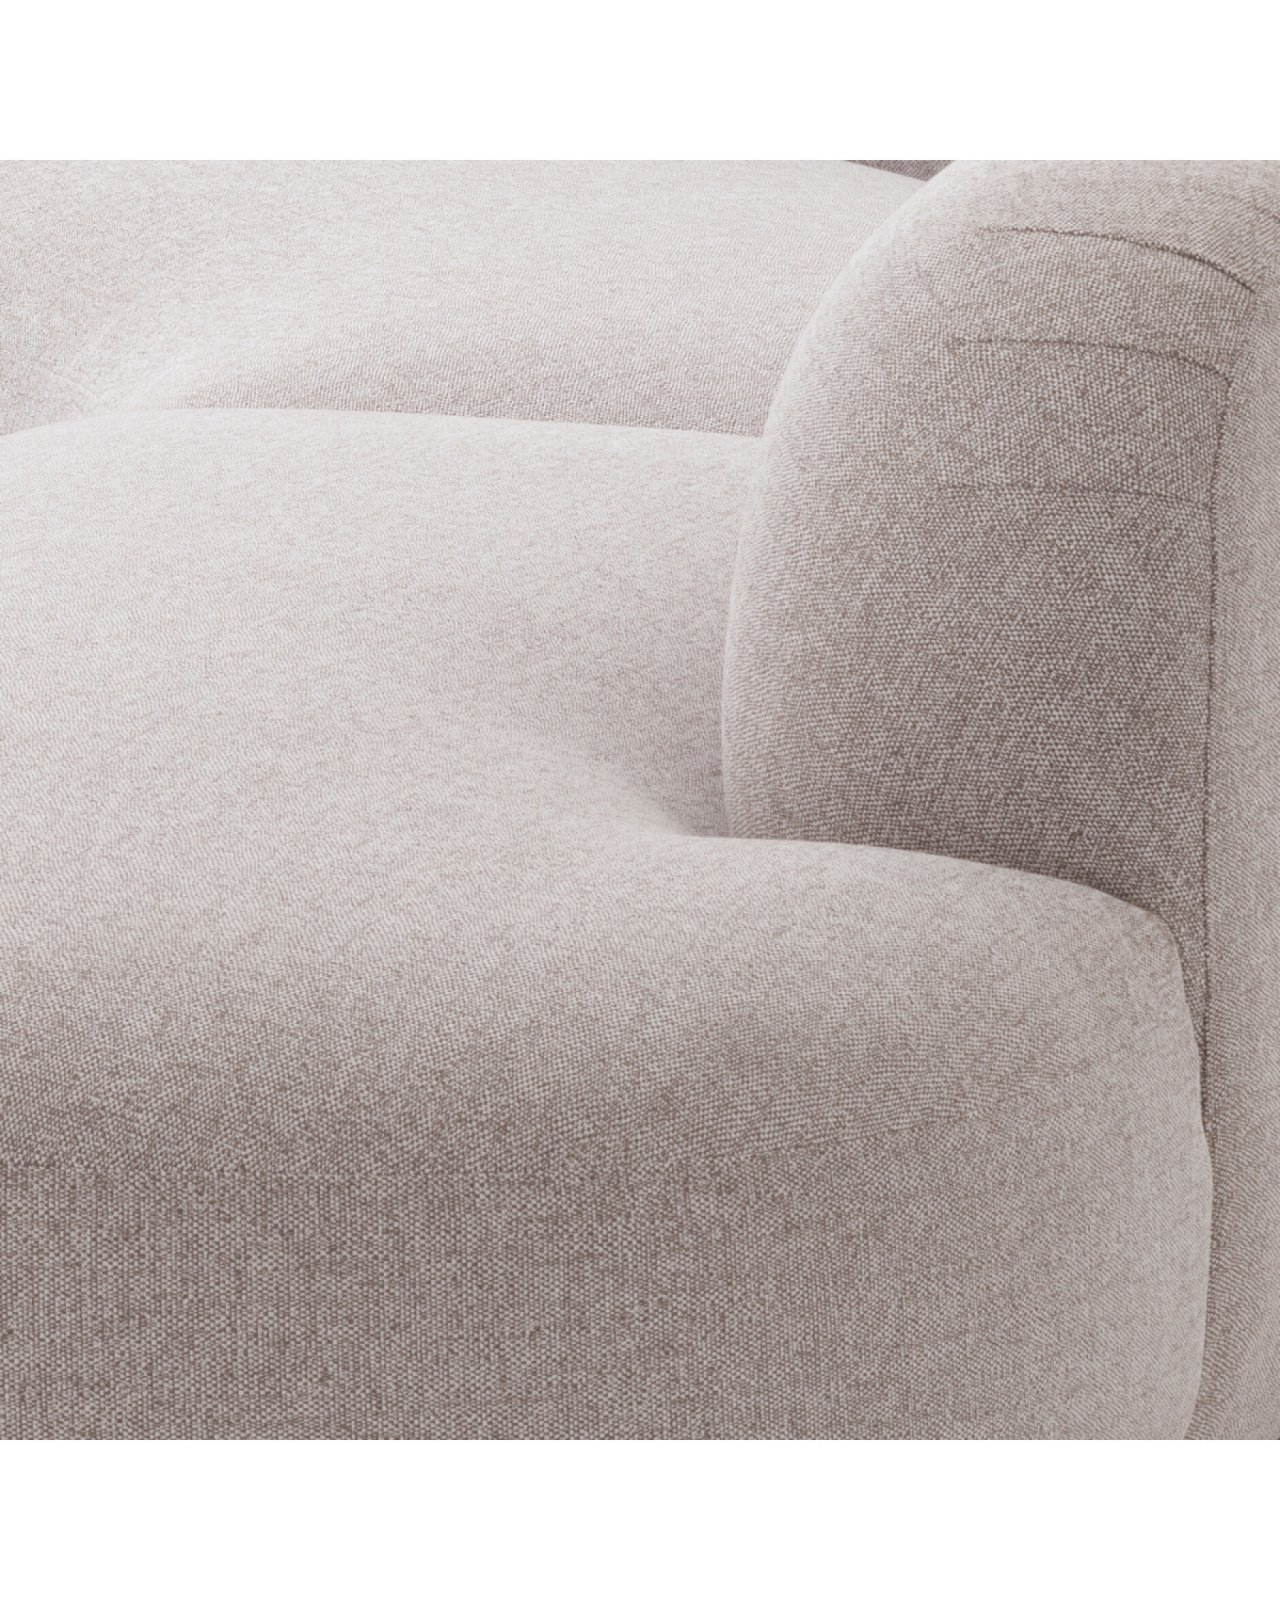 Björn sohva mauritius light grey